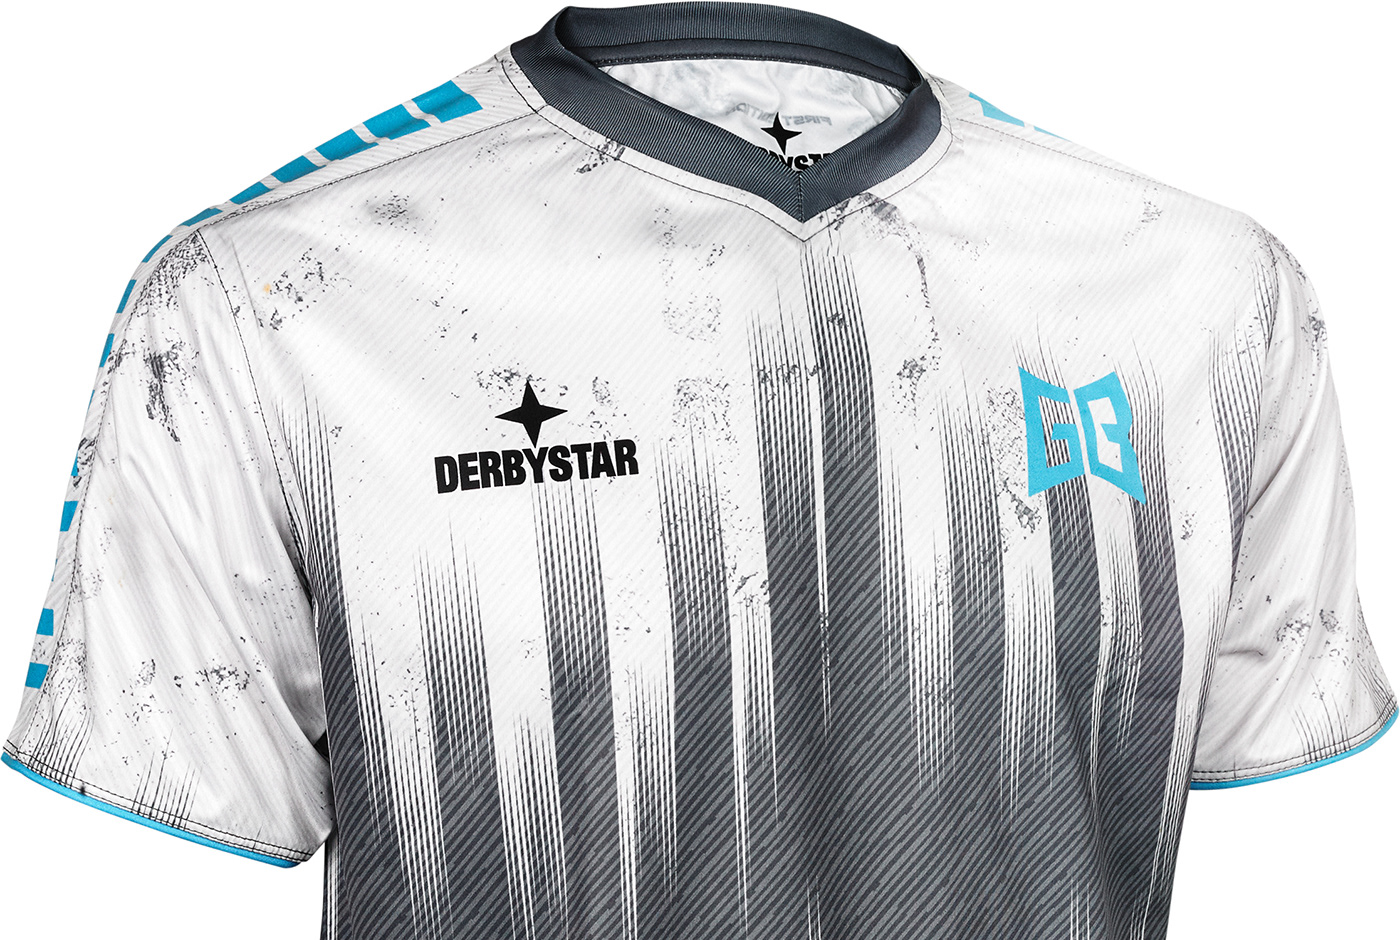 gamerborther jersey pattern design for derbystar apparel esport. Graphic designer: nicholasasmita